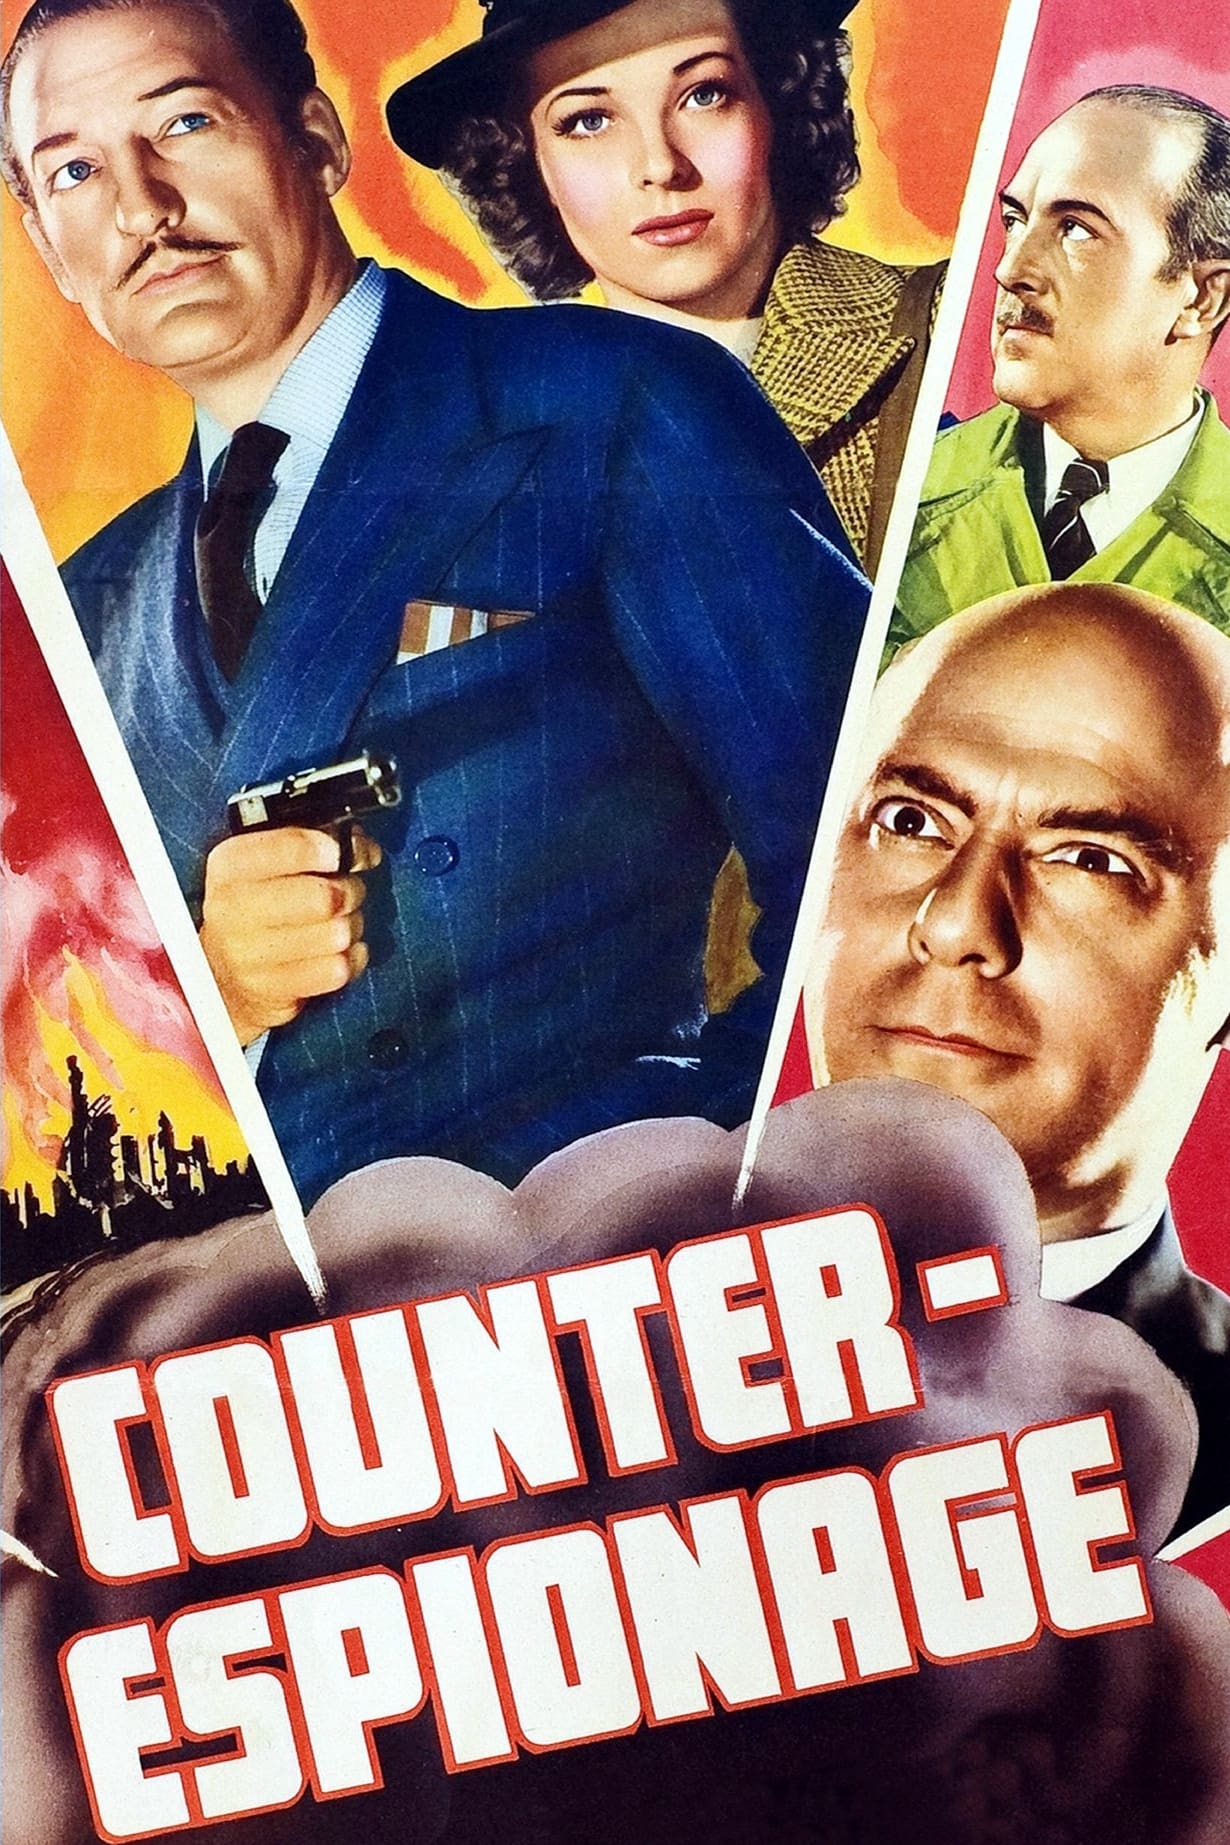 Counter-Espionage (1942)